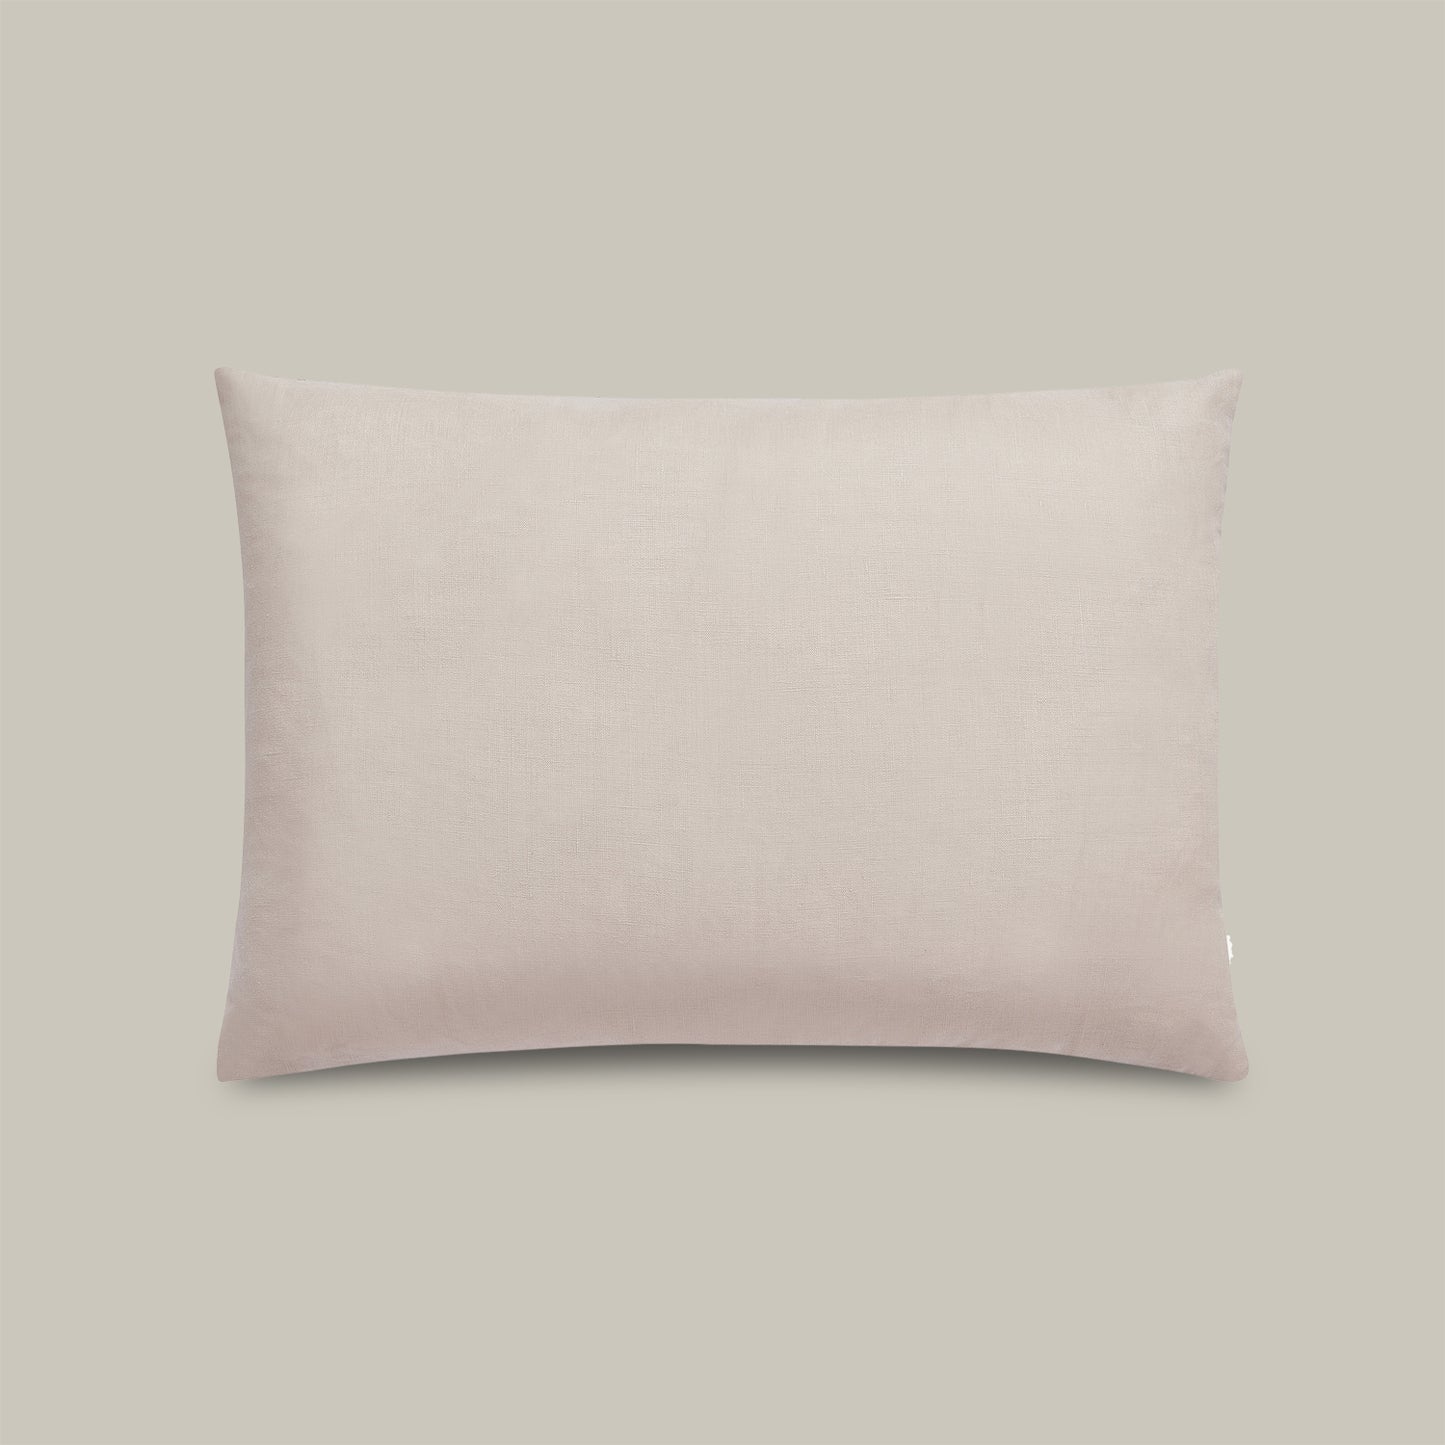 Embroidered Lattice Pillow